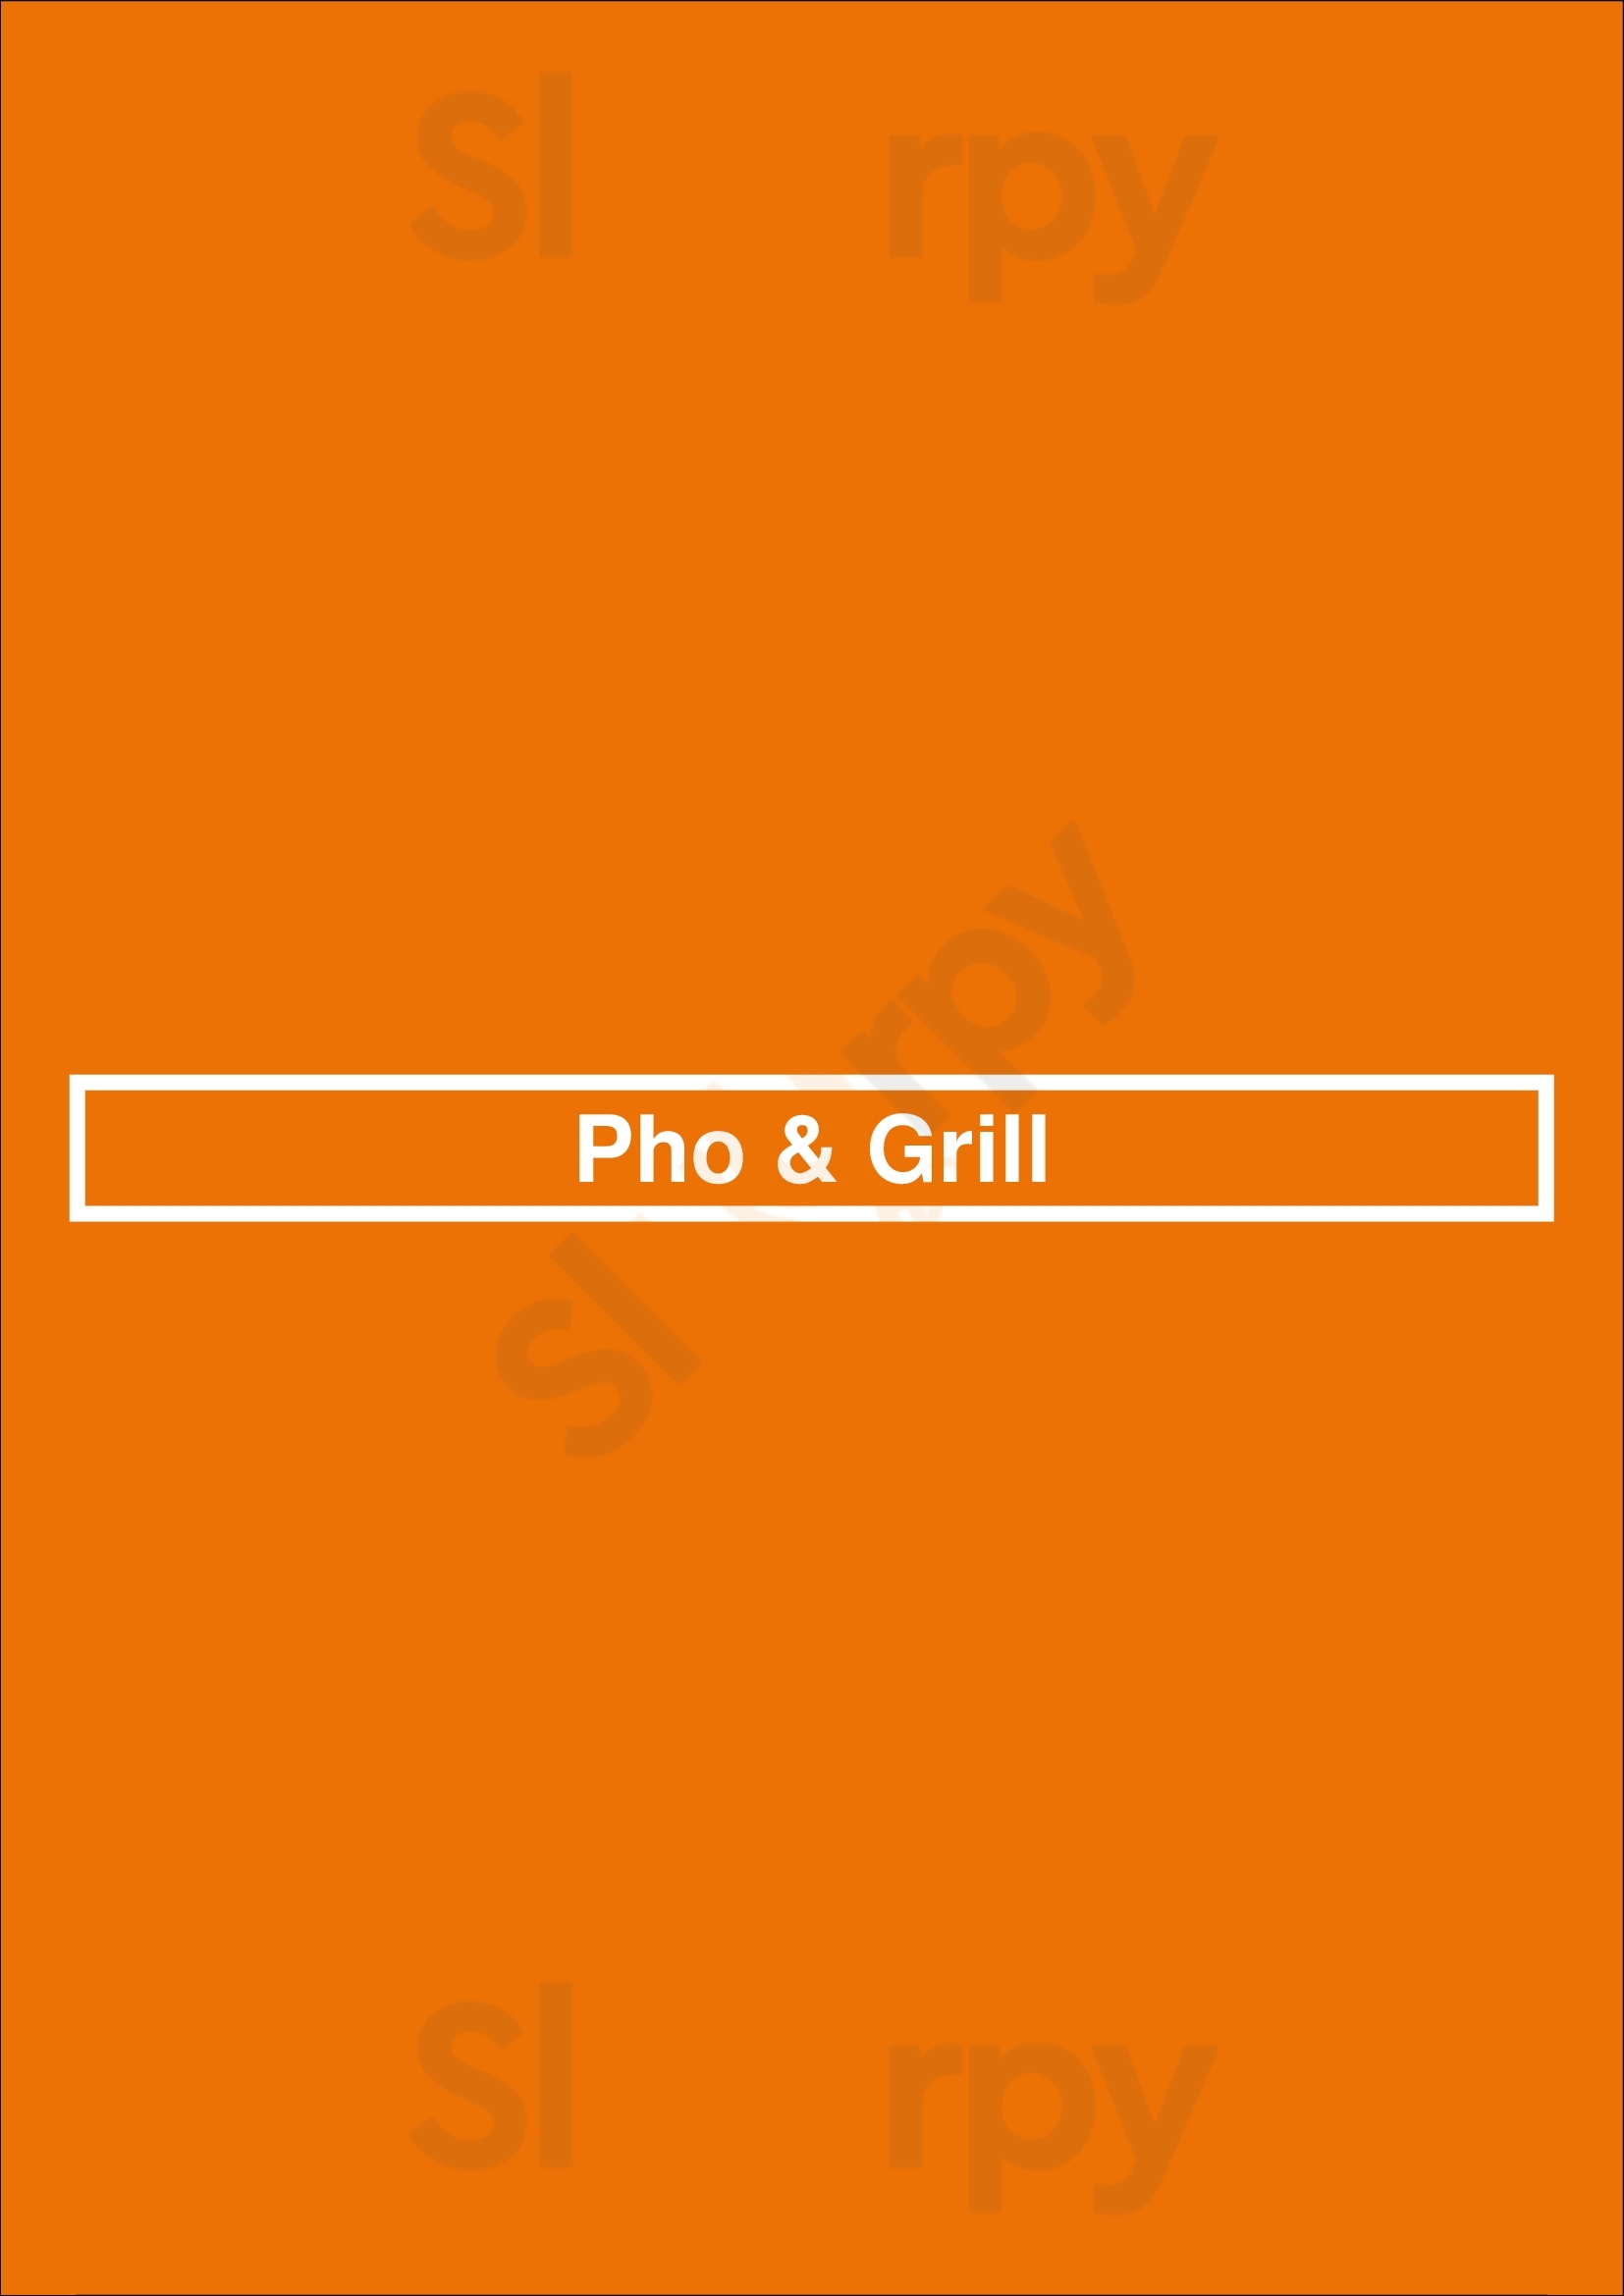 Pho & Grill Houston Menu - 1